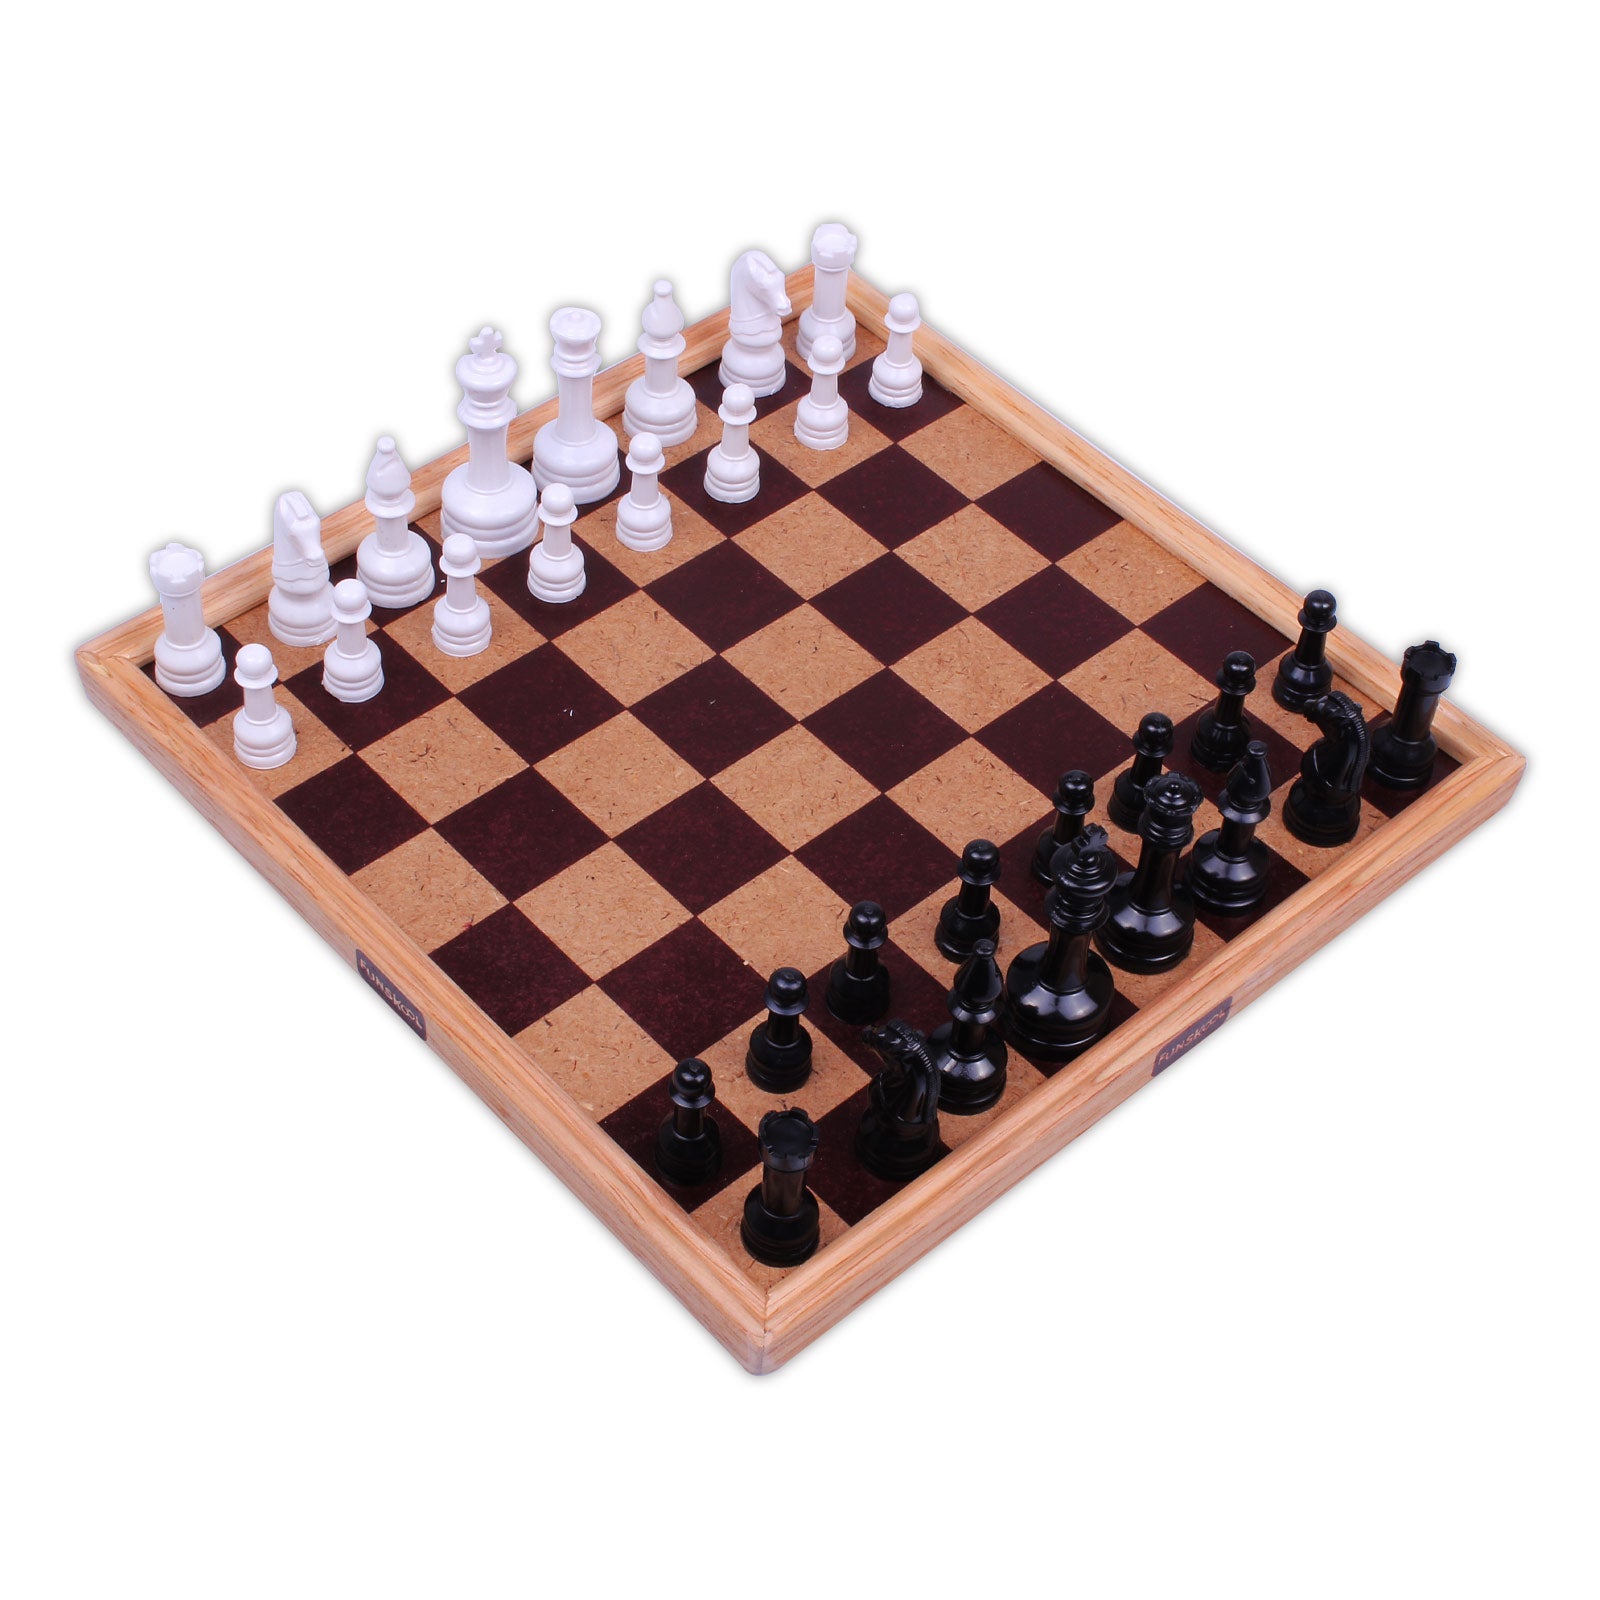 Funskool Chess